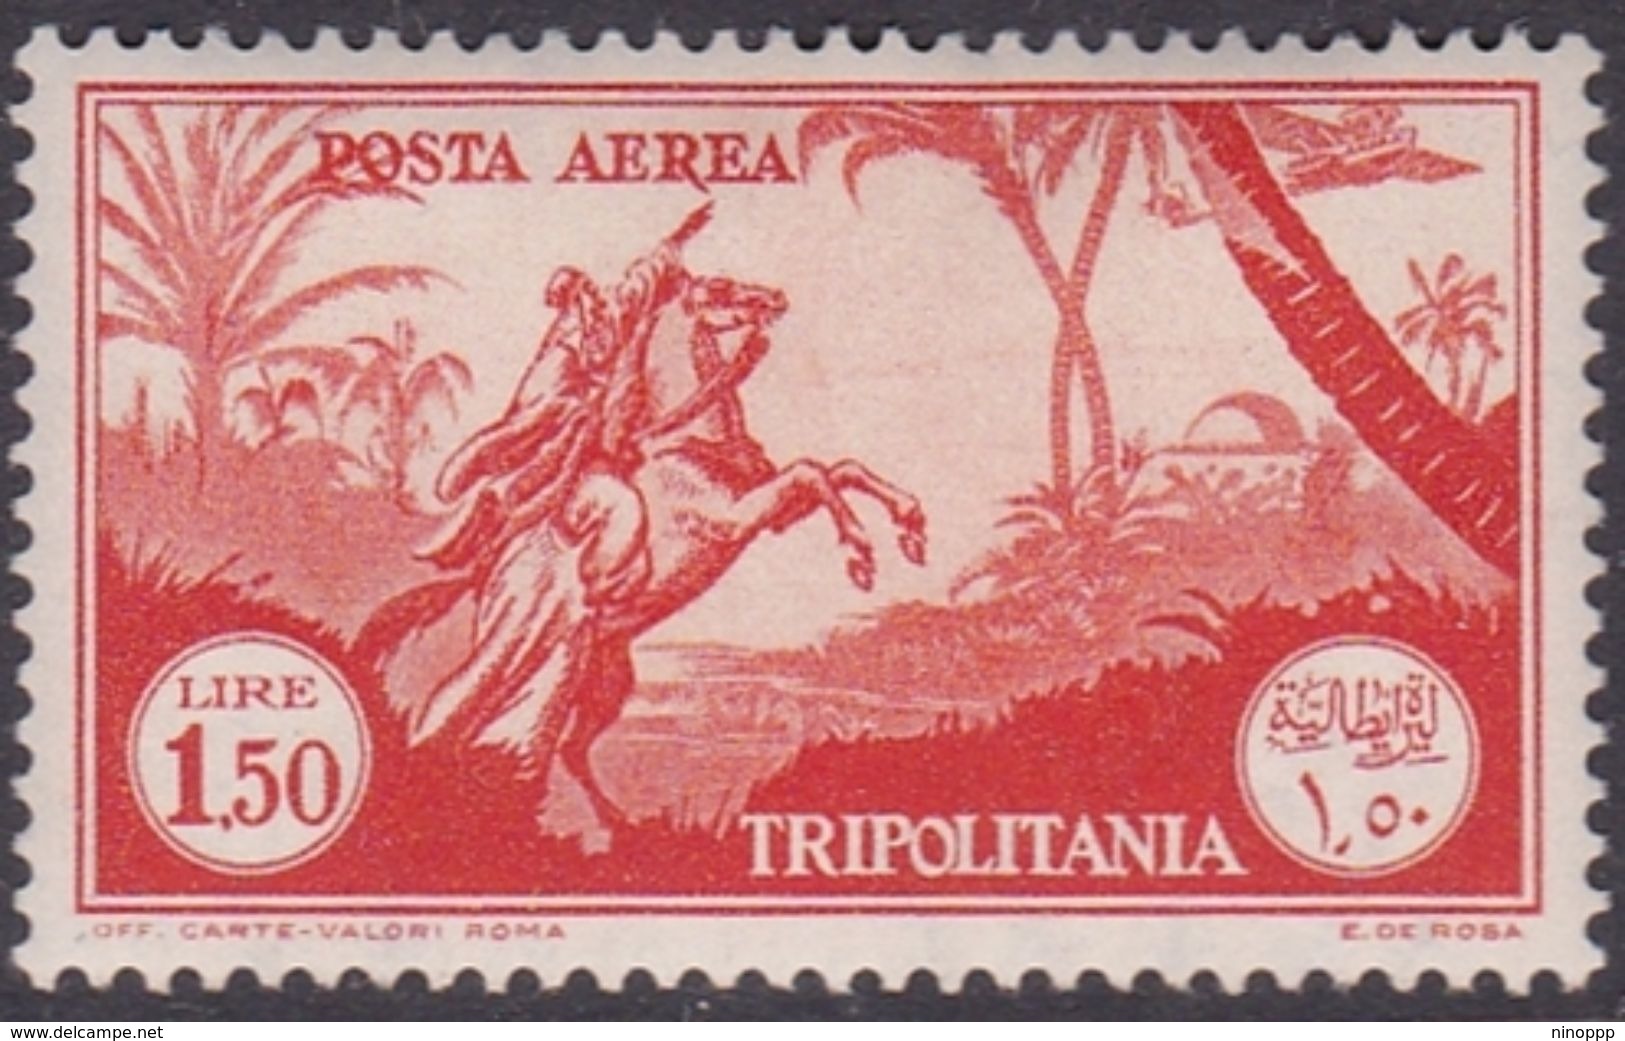 Italy-Colonies And Territories-Tripolitania A15  1931 Air Horseman, 1 .50 Orange, Mint Hinged - Tripolitania